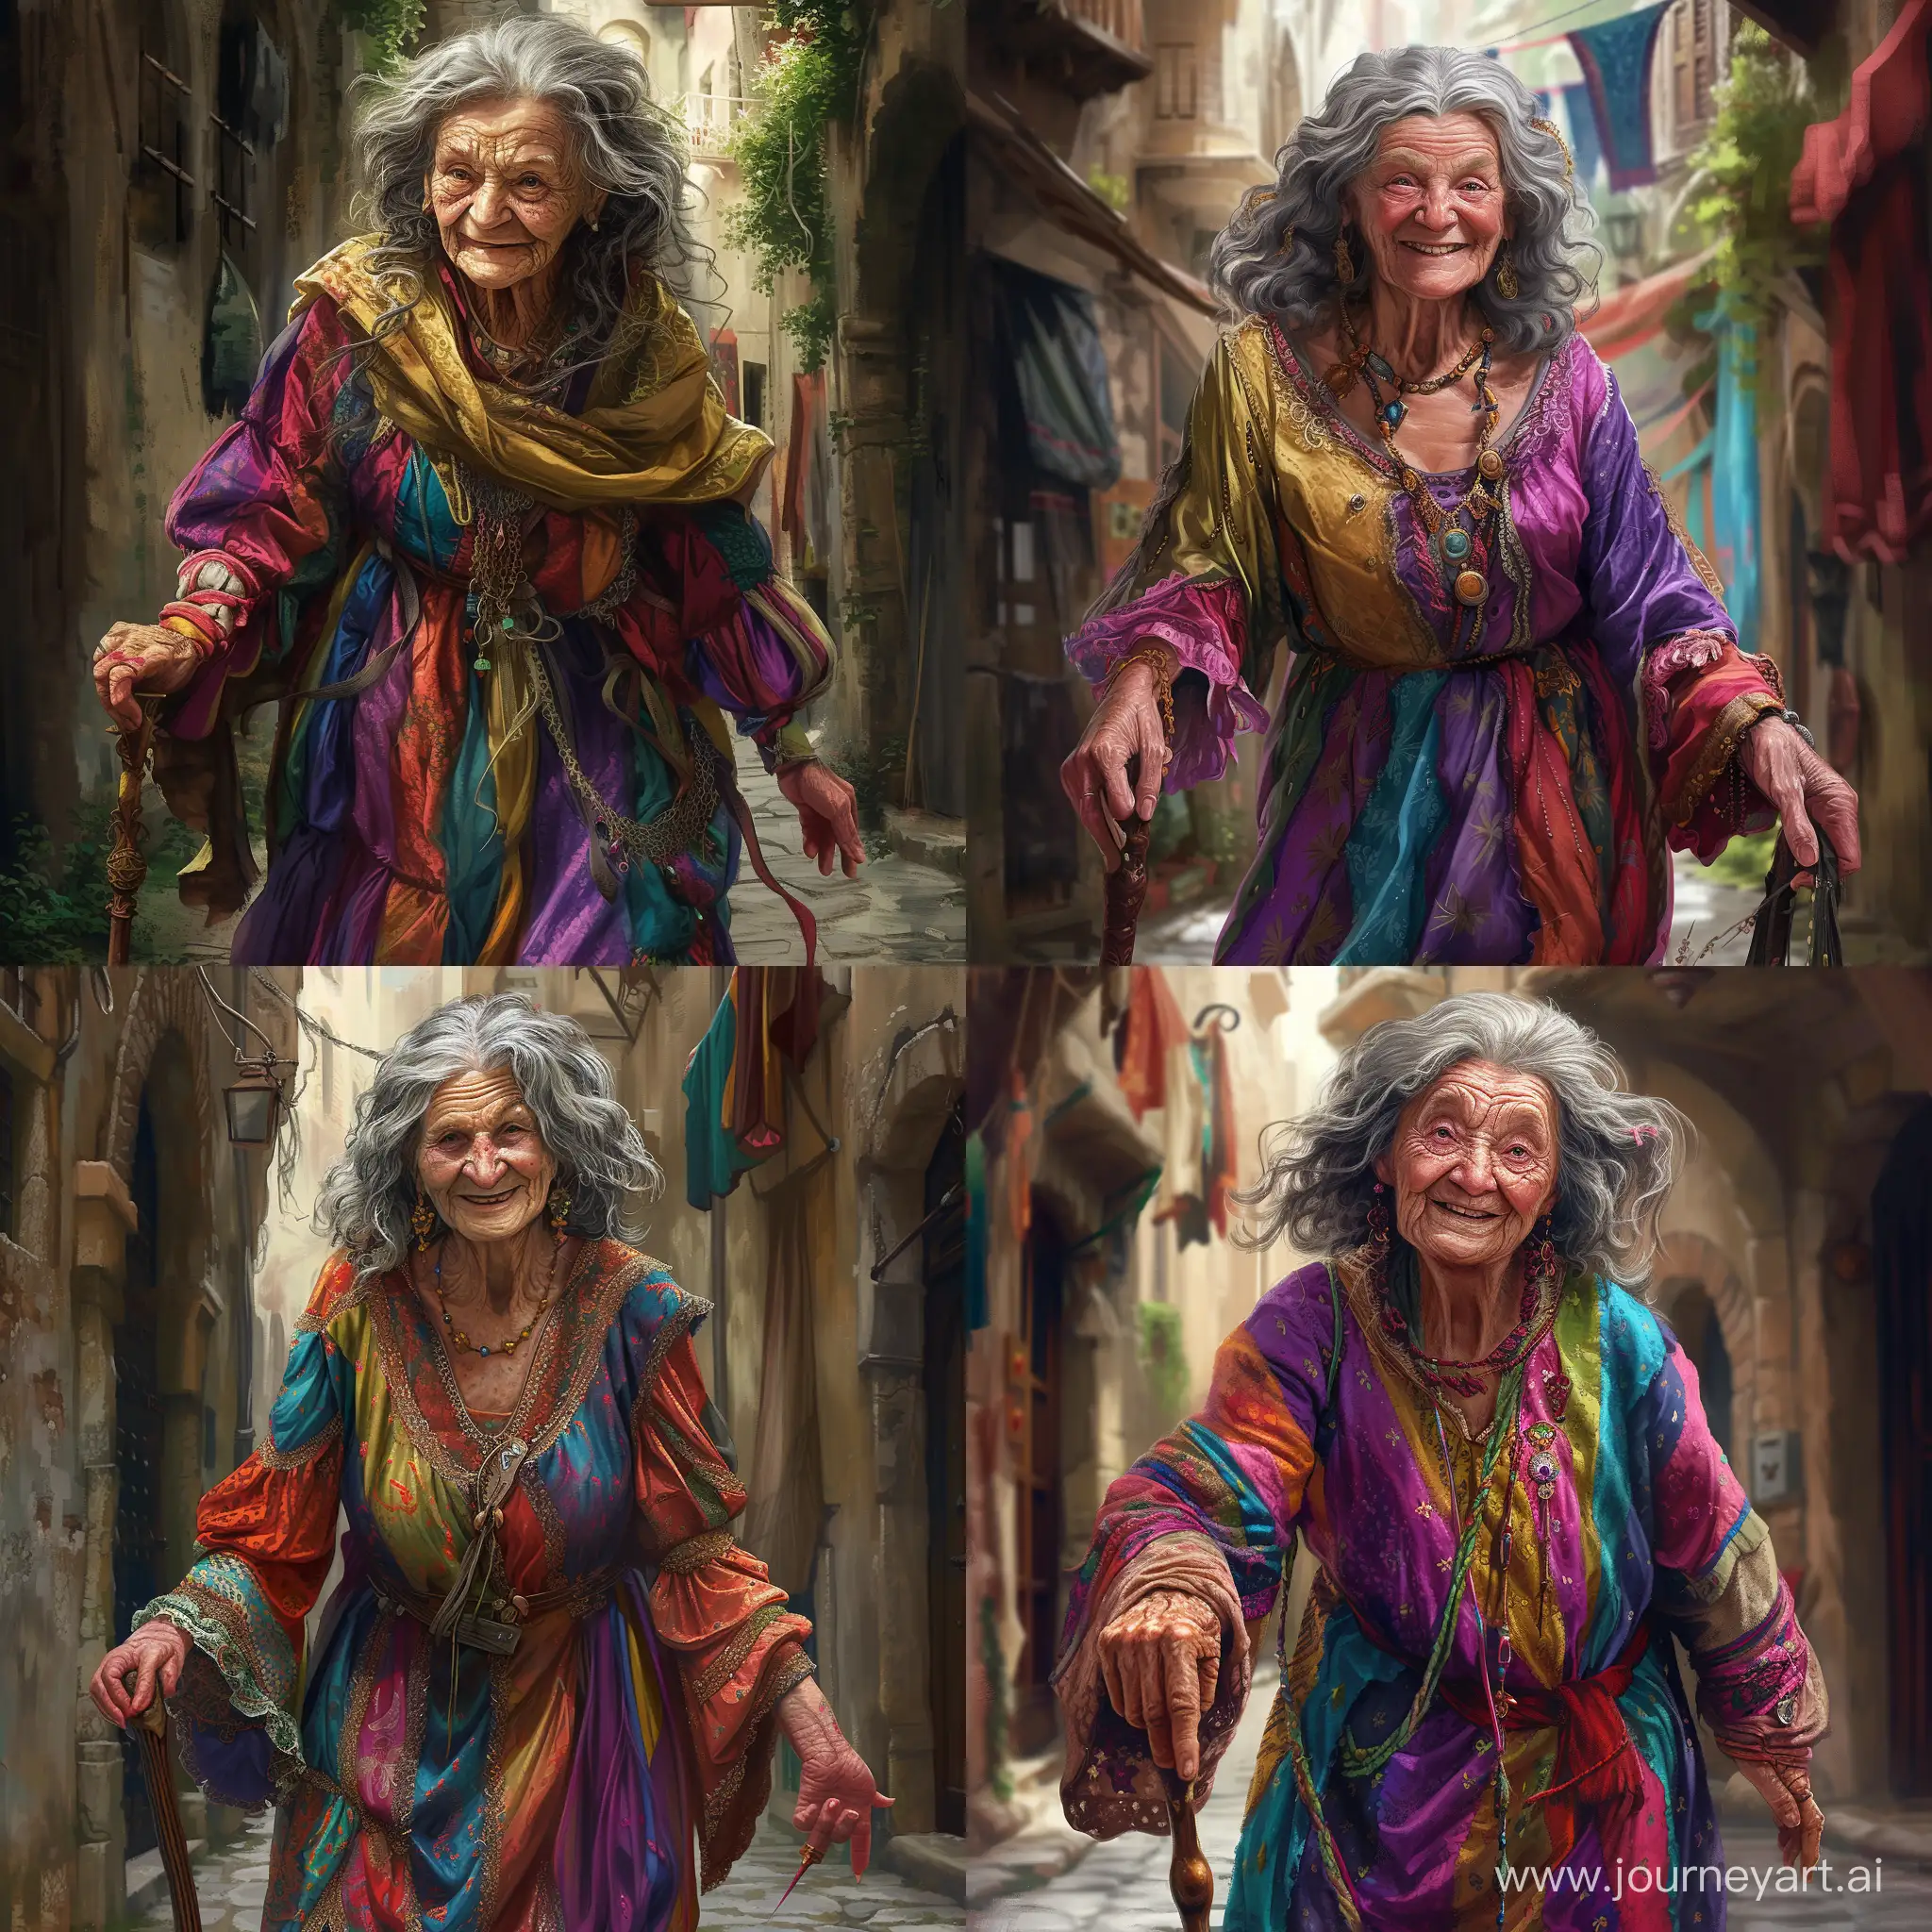 Elderly-Human-Gypsy-Woman-with-Joyful-Smile-and-Walking-Staff-in-Alleyway